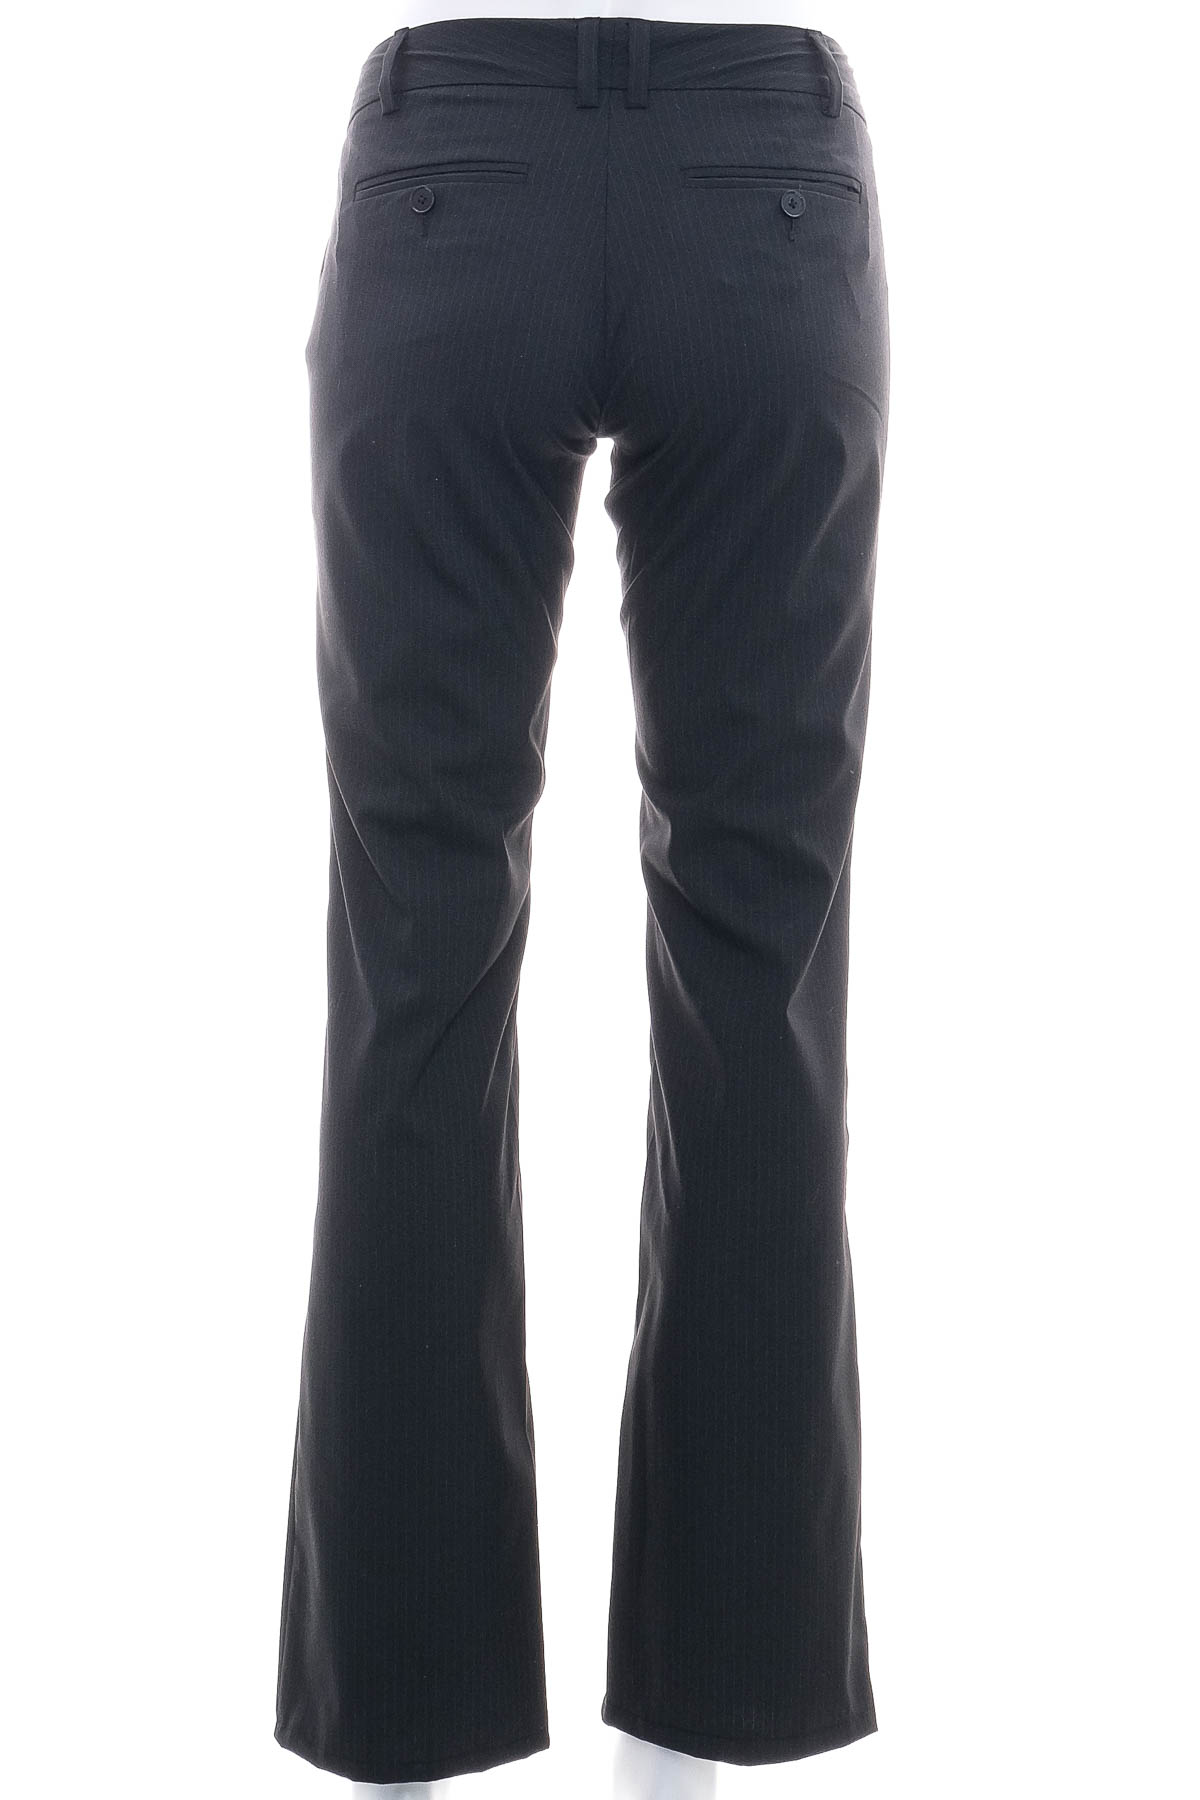 Women's trousers - MEXX - 1